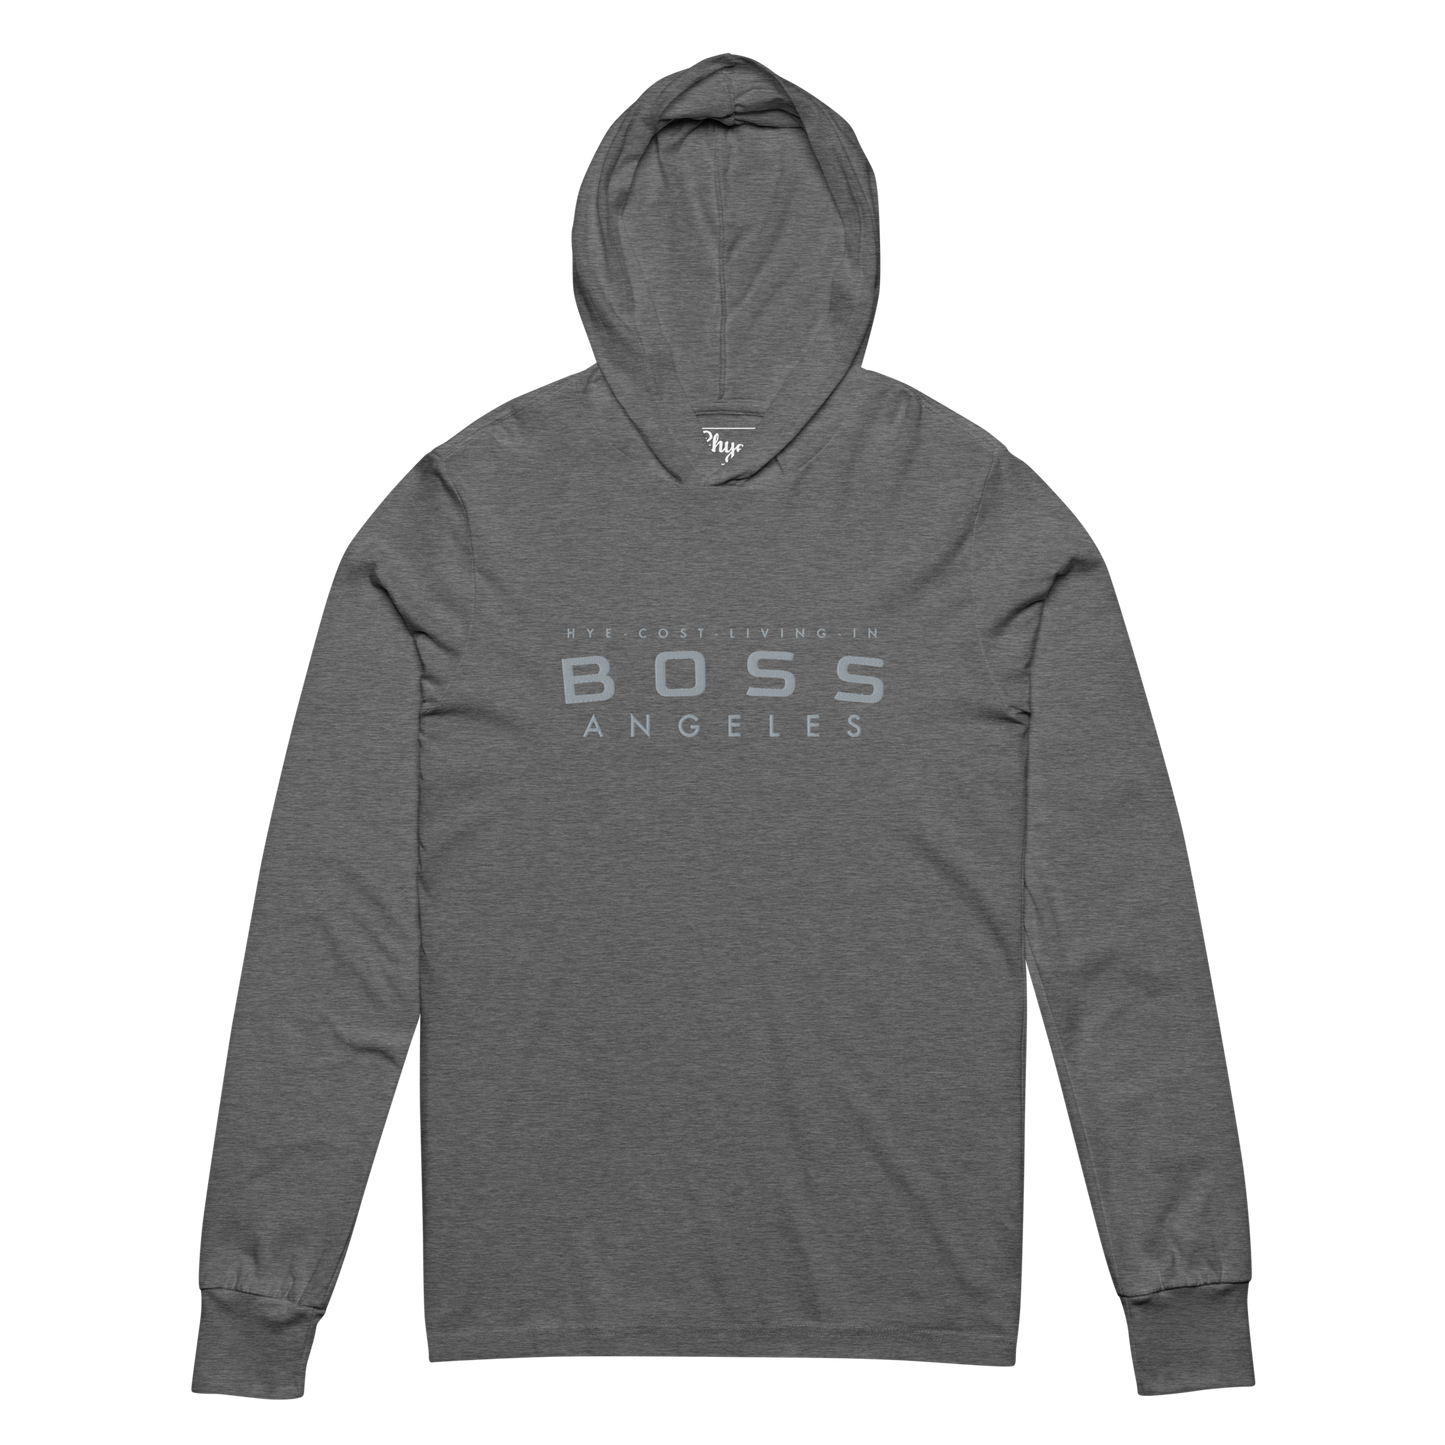 2-Hye: Boss Angeles Hooded Long-Sleeve Top